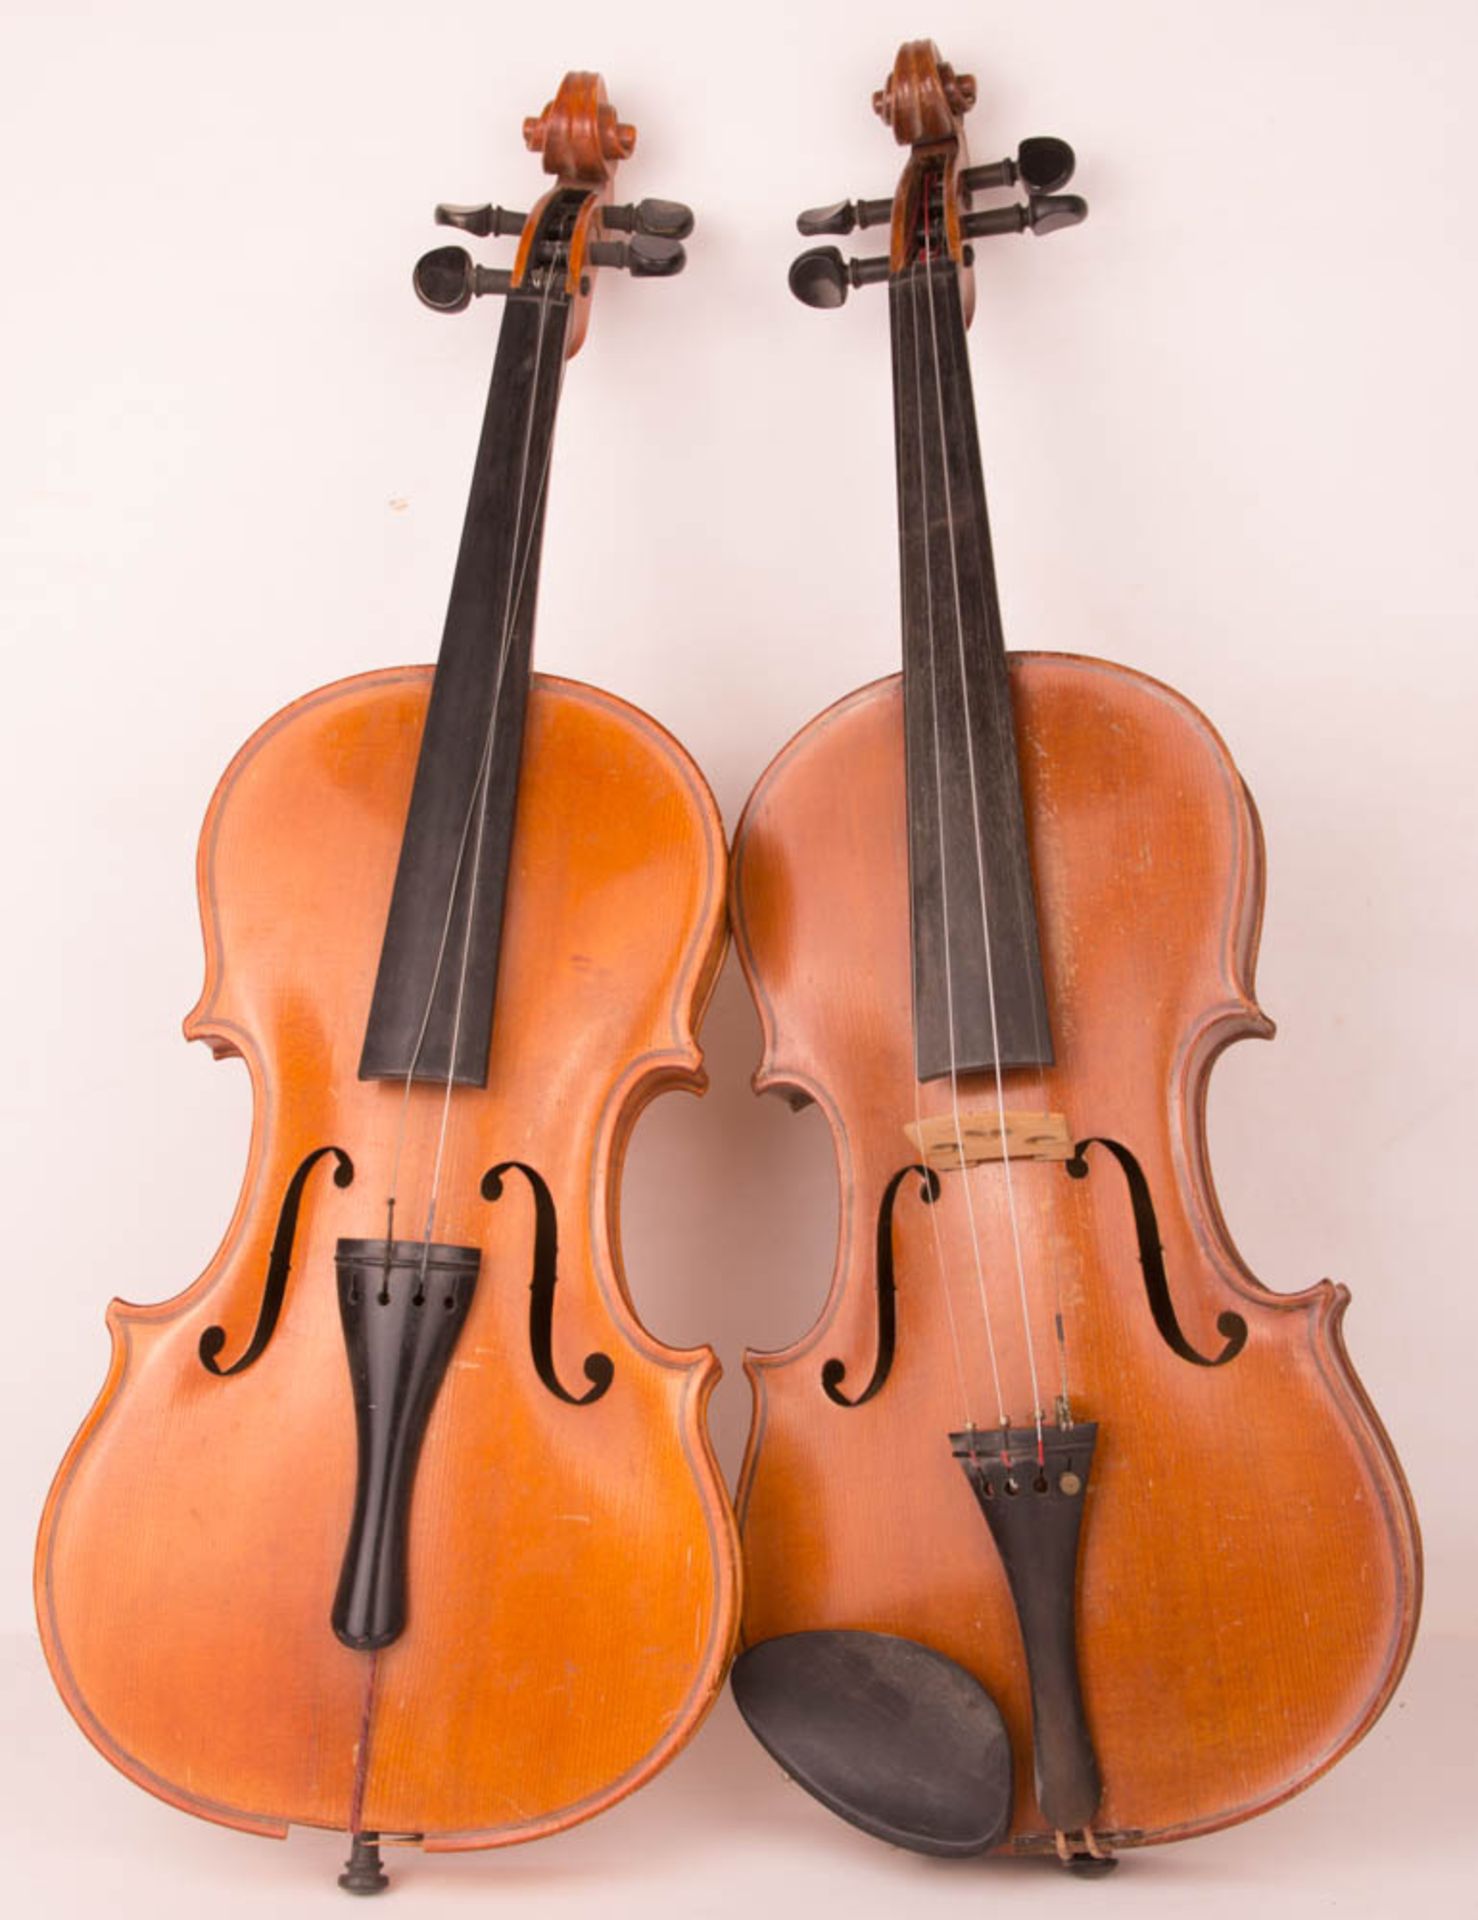 Two violins, Aubert Mirecourt, beginning of the 20th century.